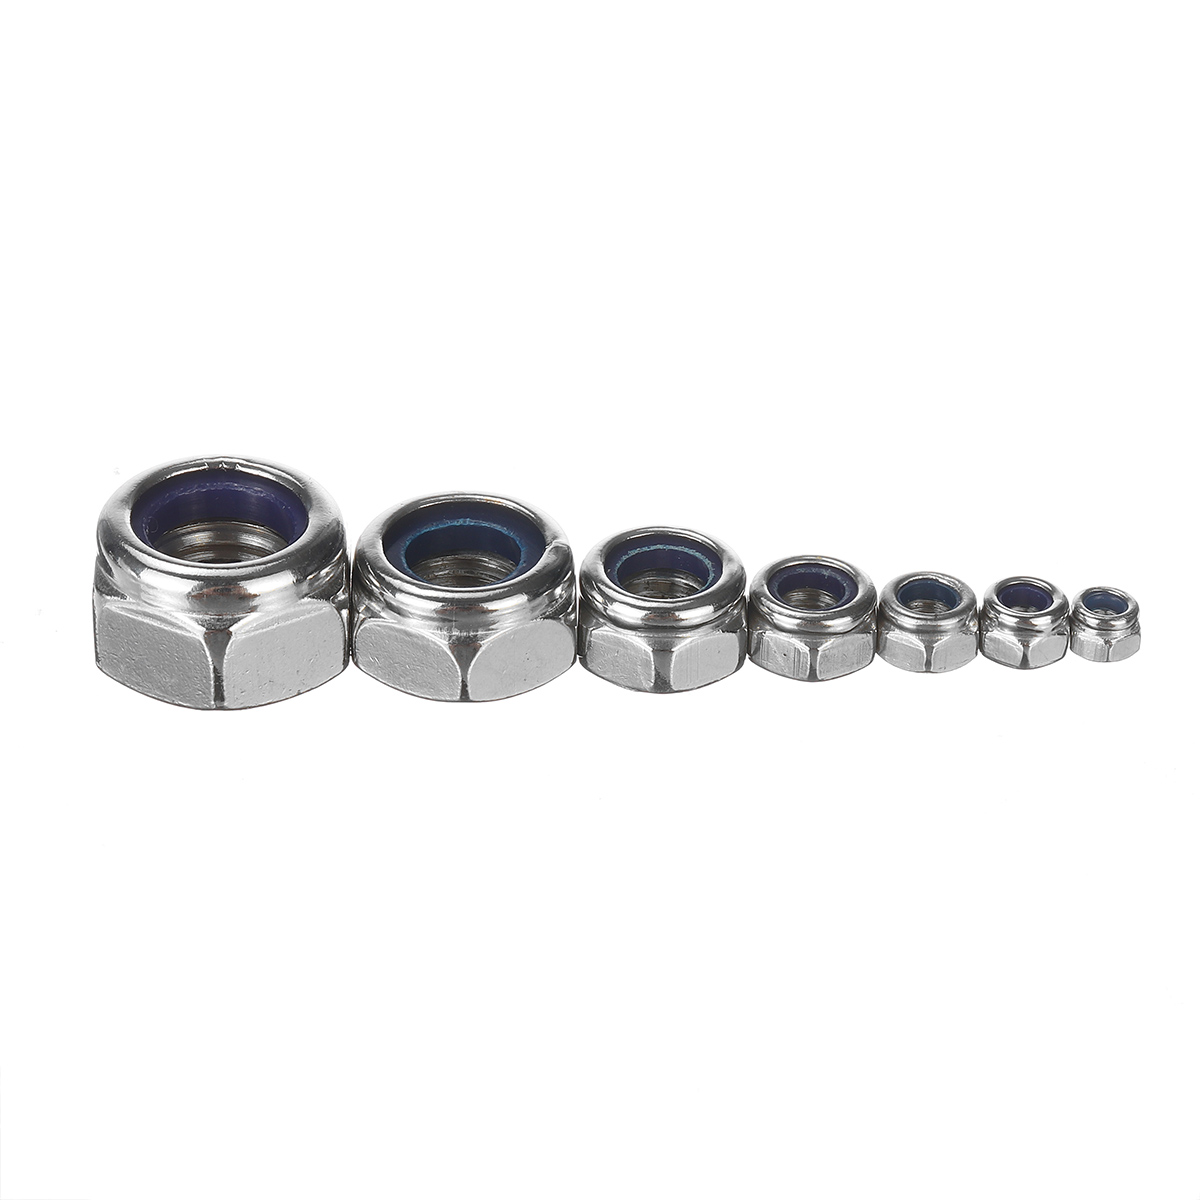 170Pcs Stainless Steel Lock Nut Assortment M3 4 5 6 8 10 12 Nylon Insert Kit σ 